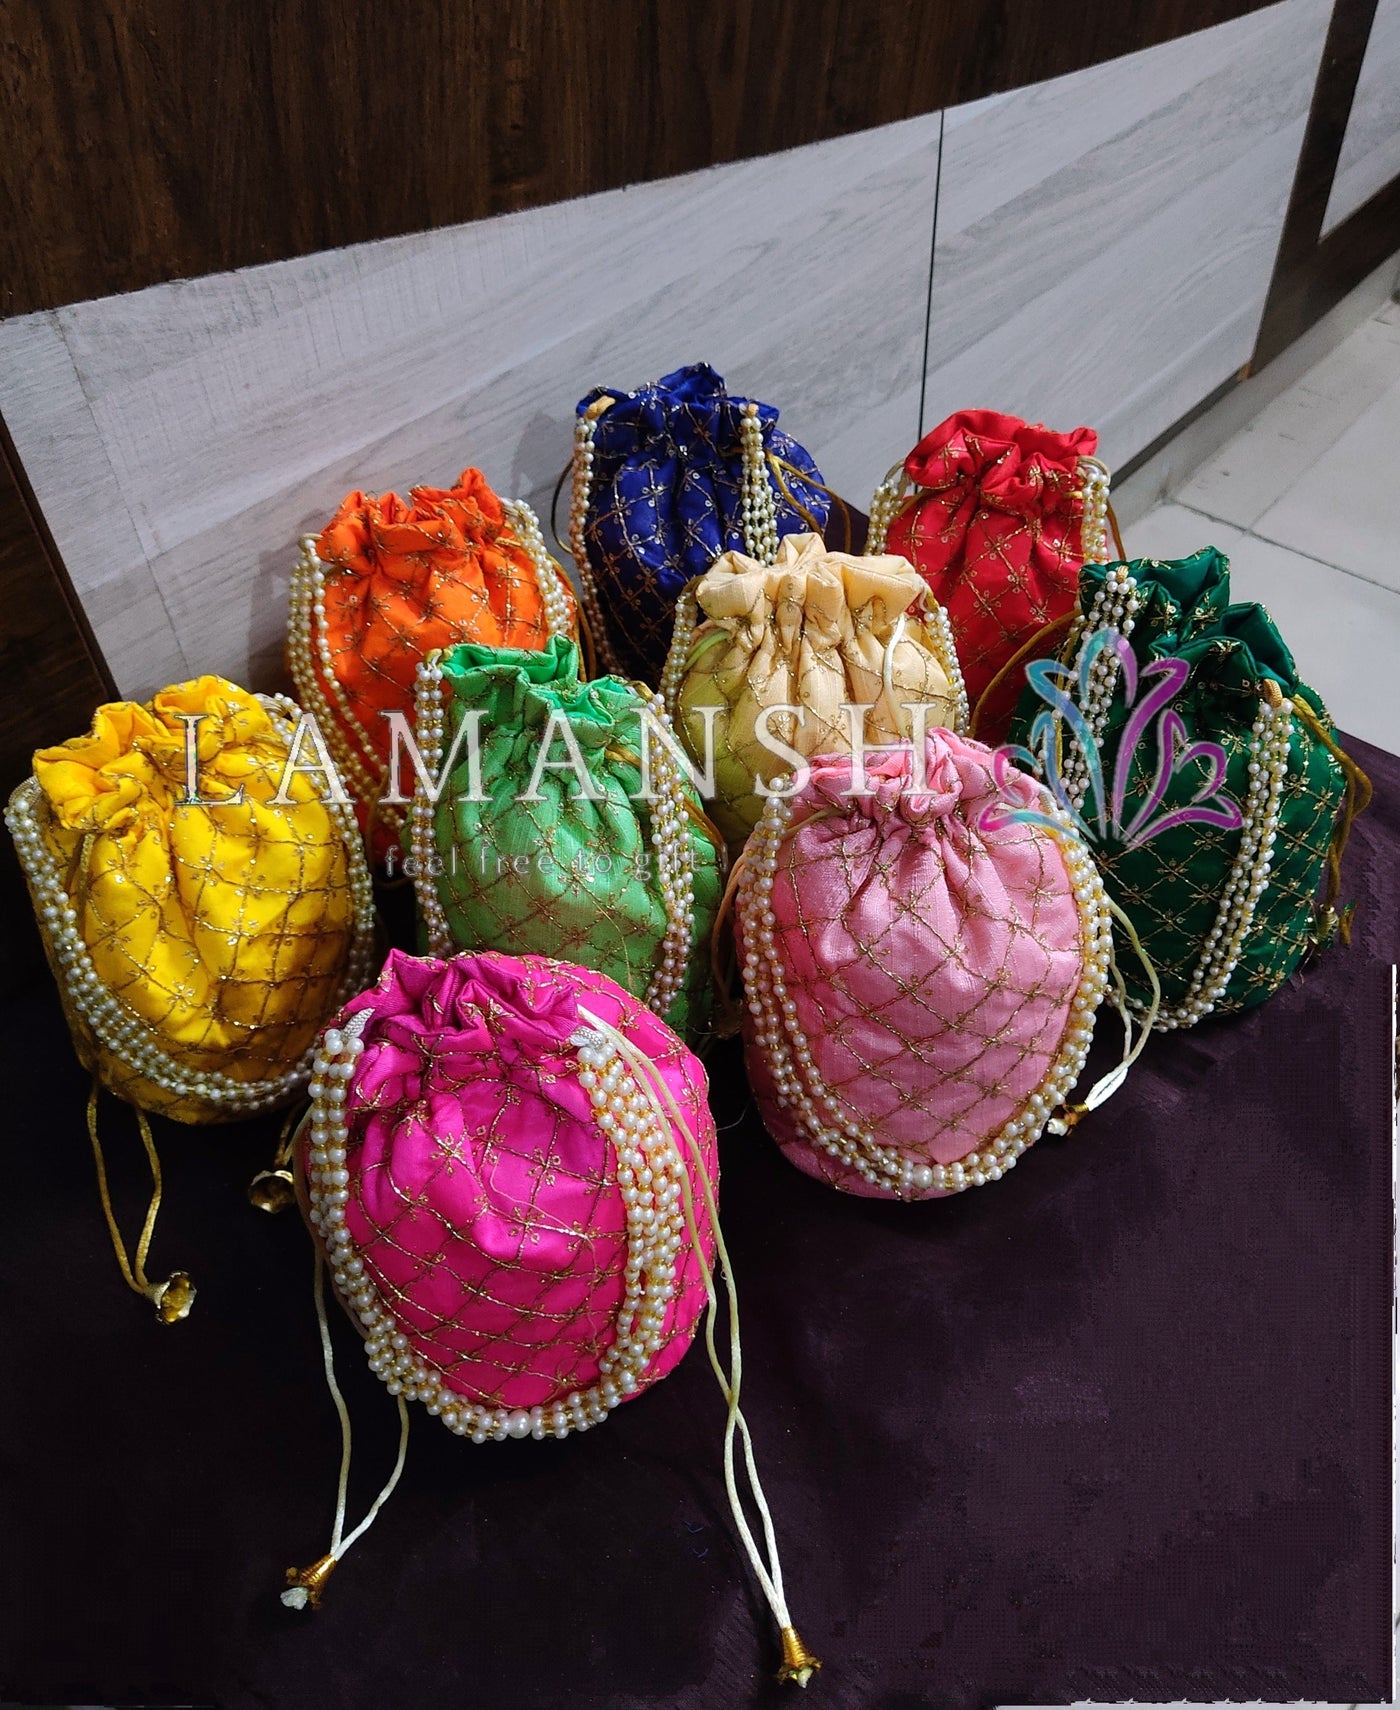 LAMANSH ® Women's Potli Bag Pack of 20 LAMANSH® Pack of 20 Embroidered Women's Potli Bag / Ethnic Potli Bags Purse for Giveaways & Weddings Favours